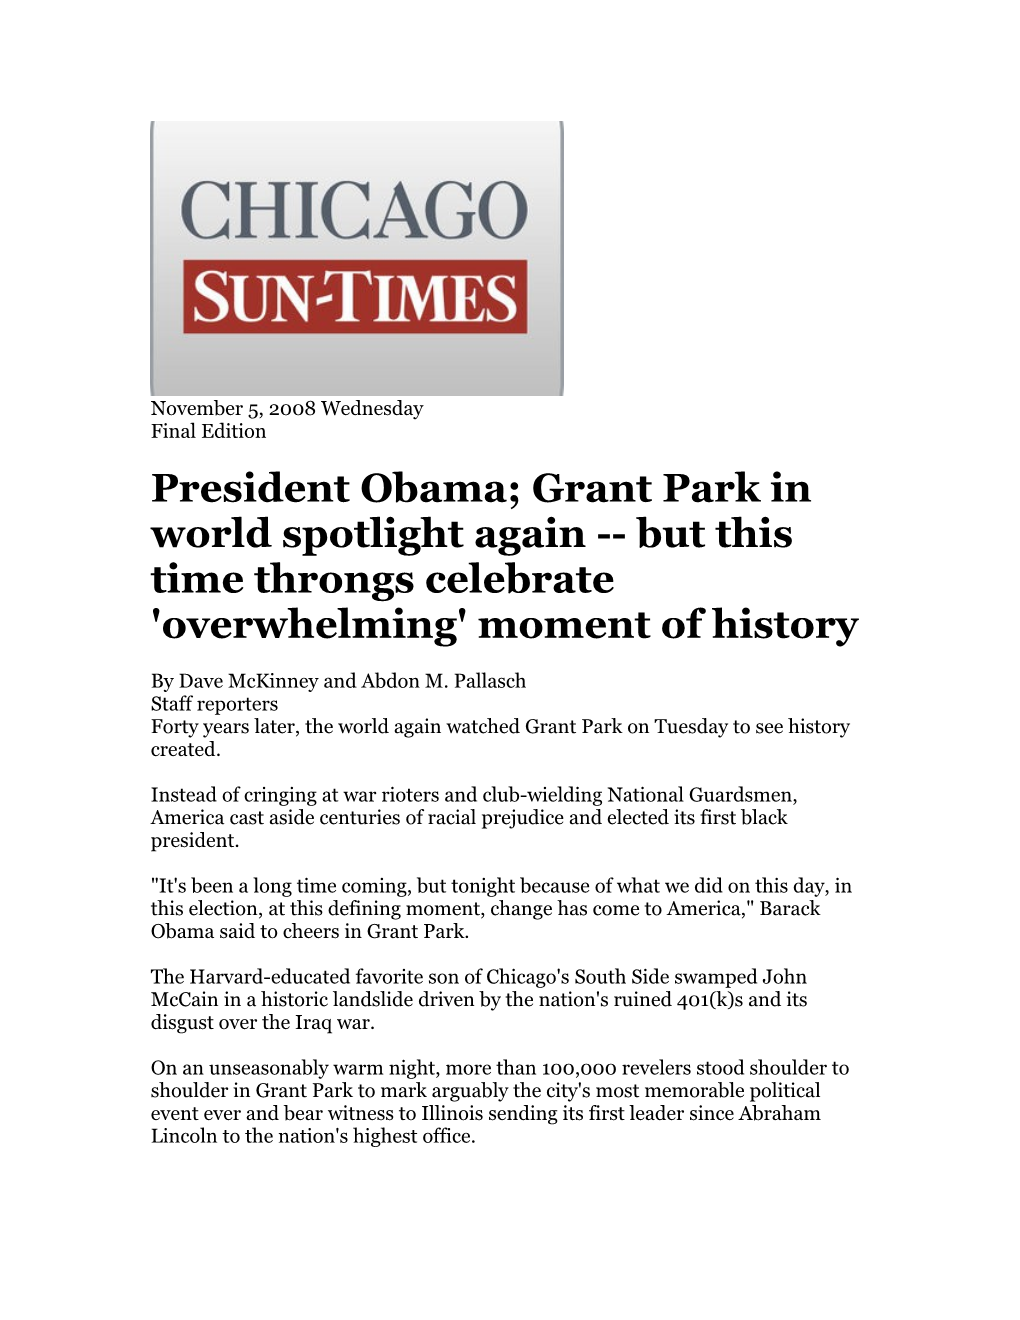 President Obama; Grant Park in World Spotlight Again but This Time Throngs Celebrate